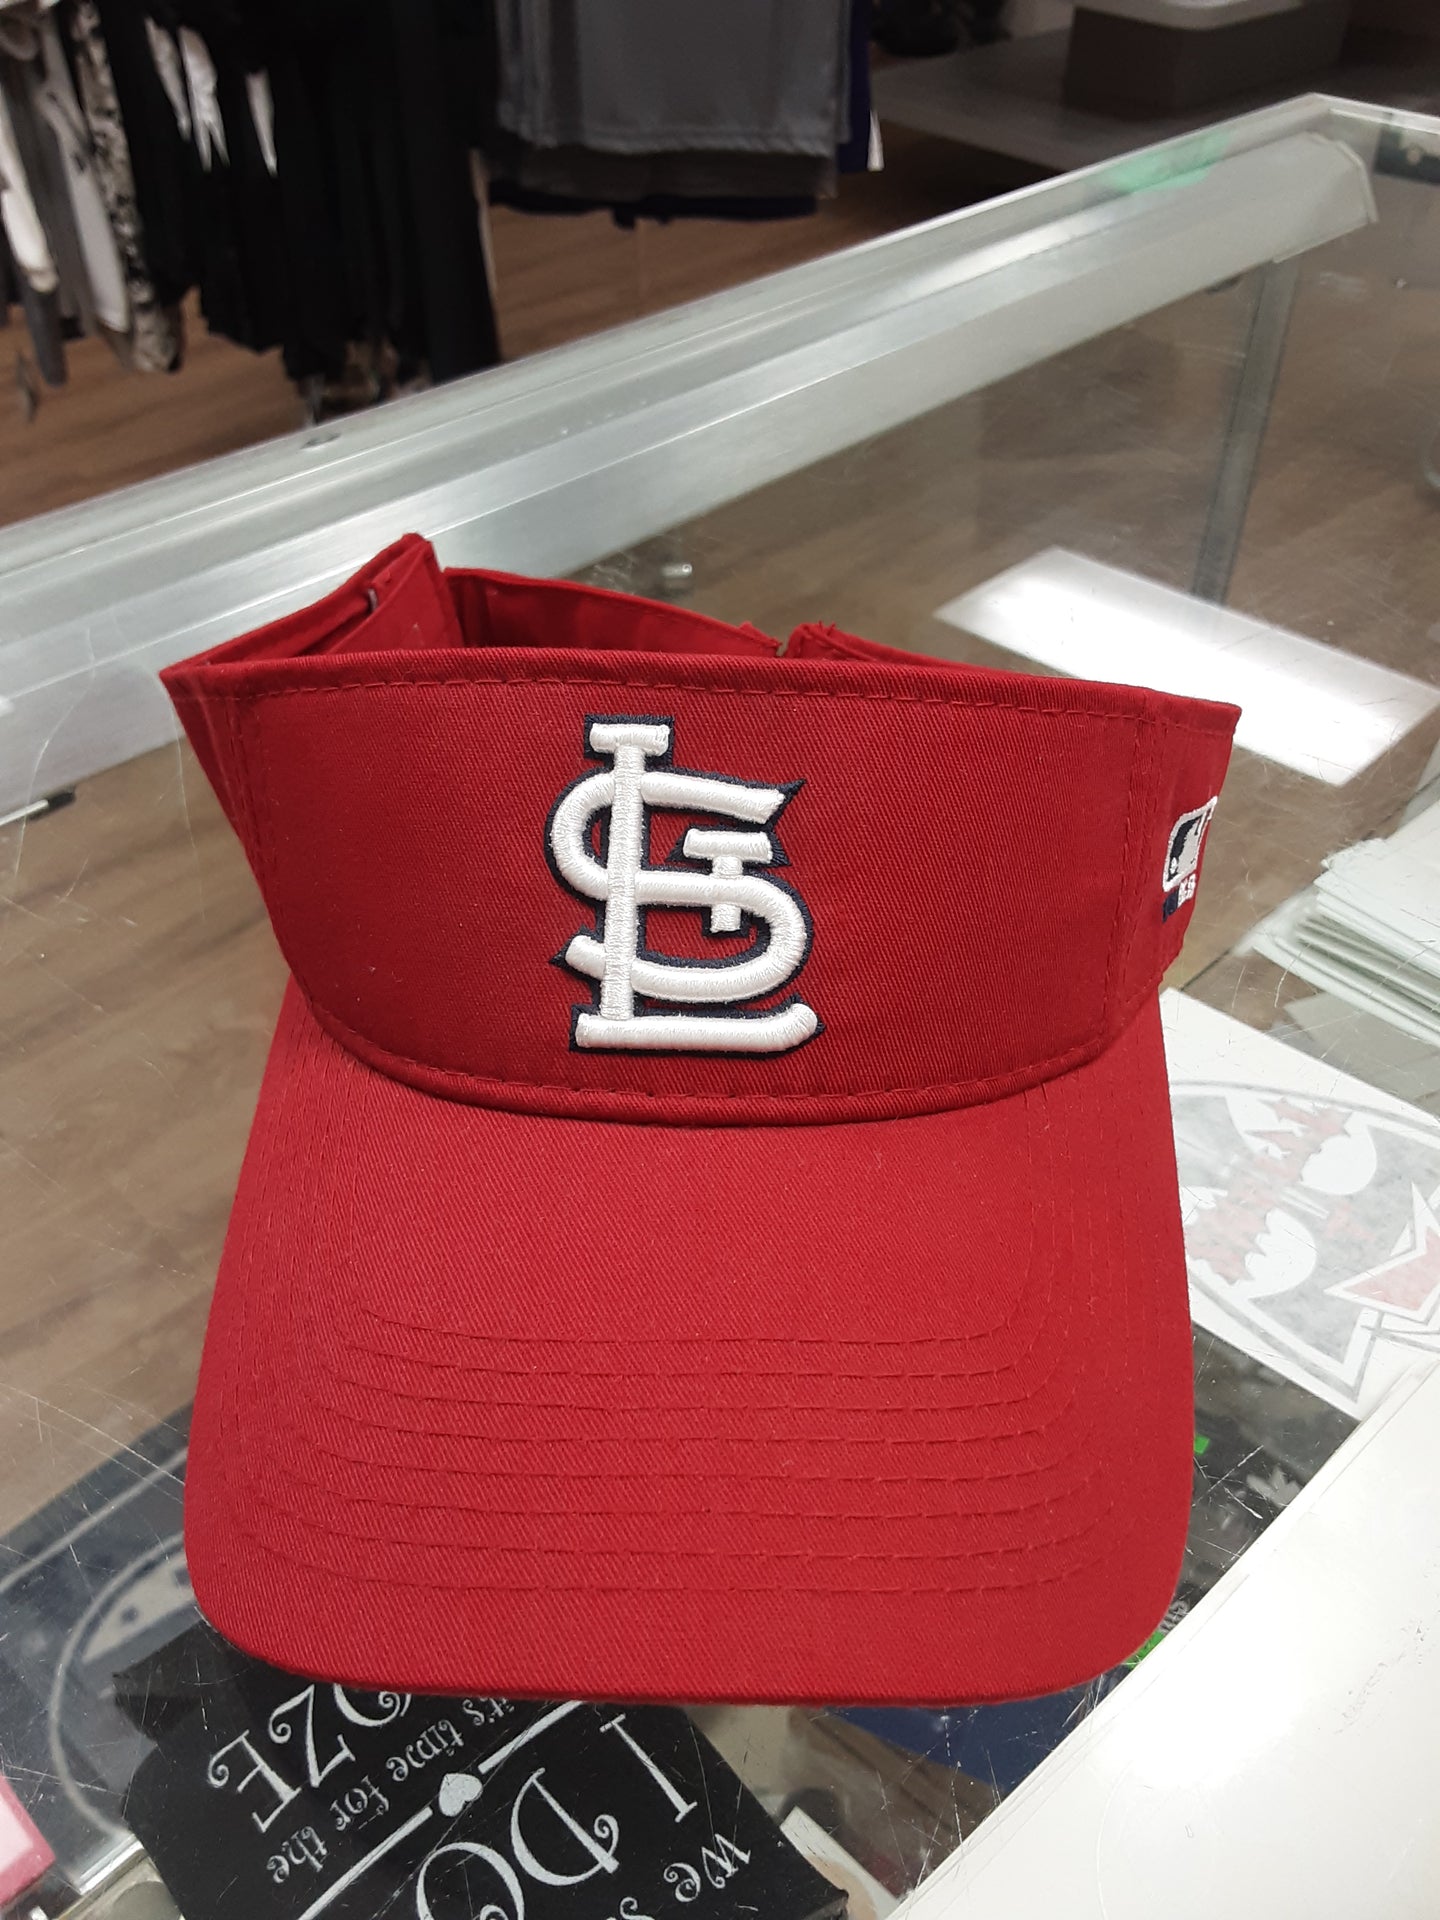 Fan Favorite - MLB Basic Cap, St. Louis Cardinals 